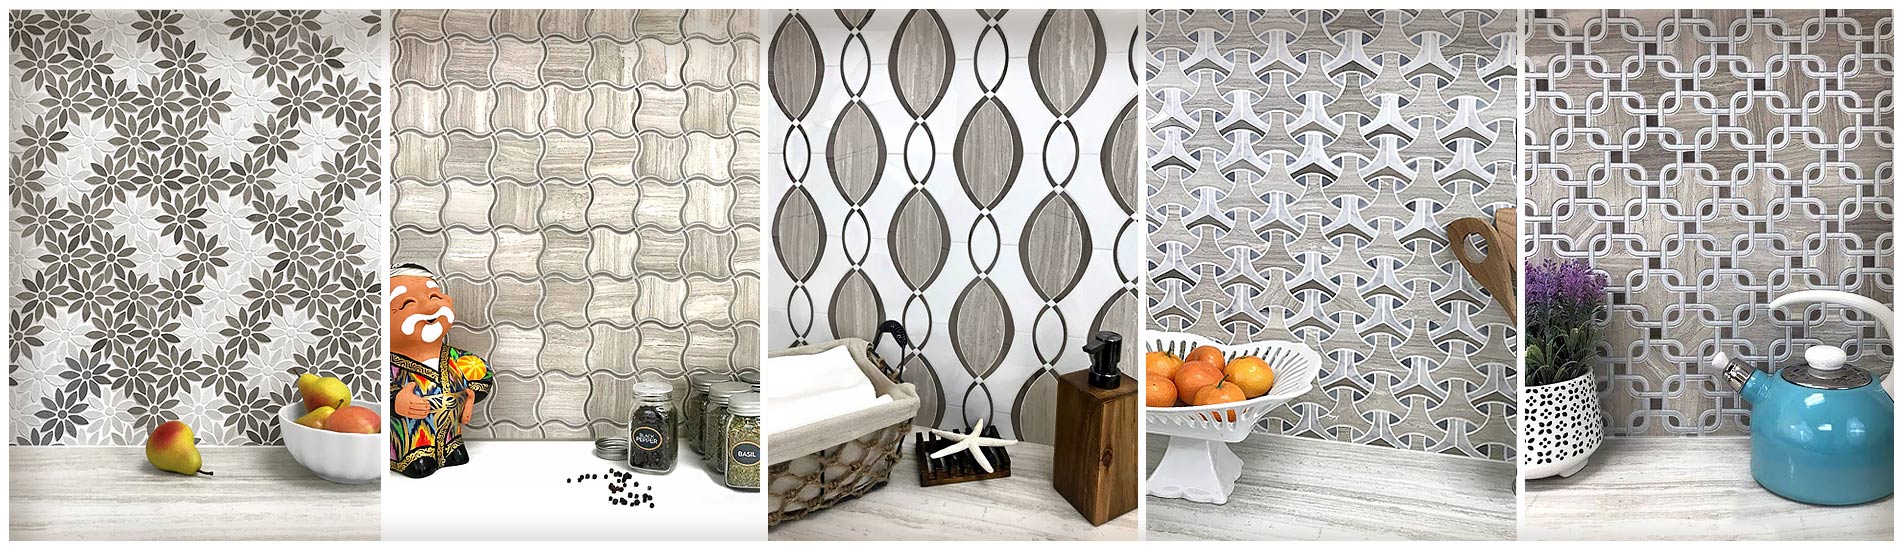 Mir Mosaics: Elegance and Innovation in Tile Design